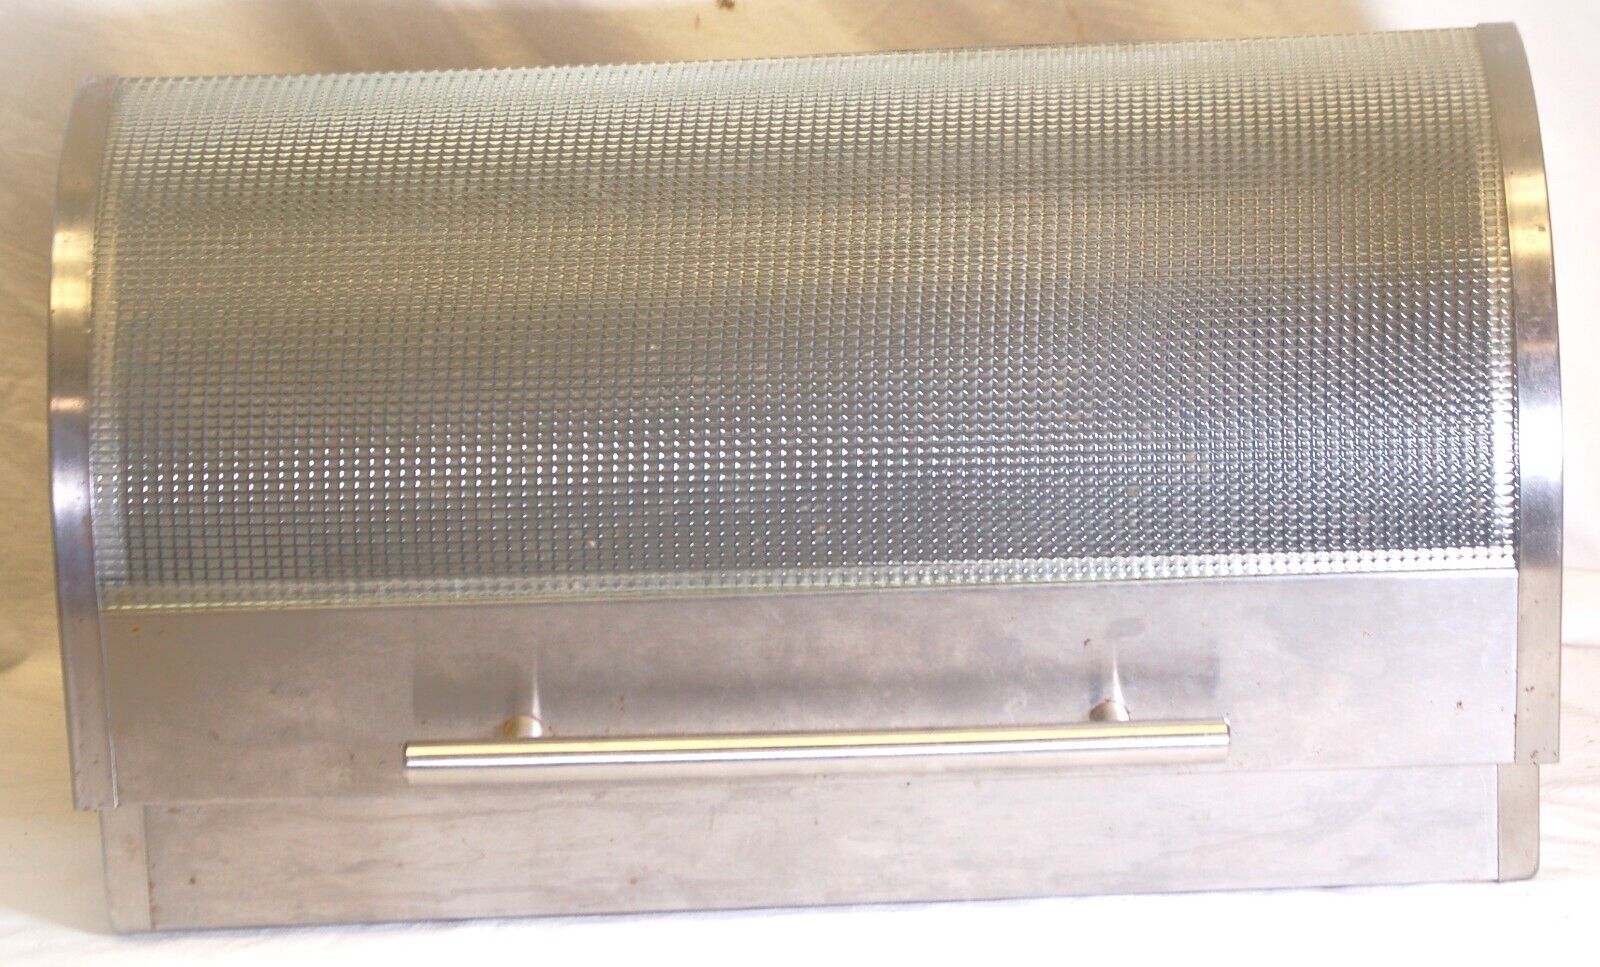 Primary image for Bread Box Stainless Steel Kitchen Storage Bin